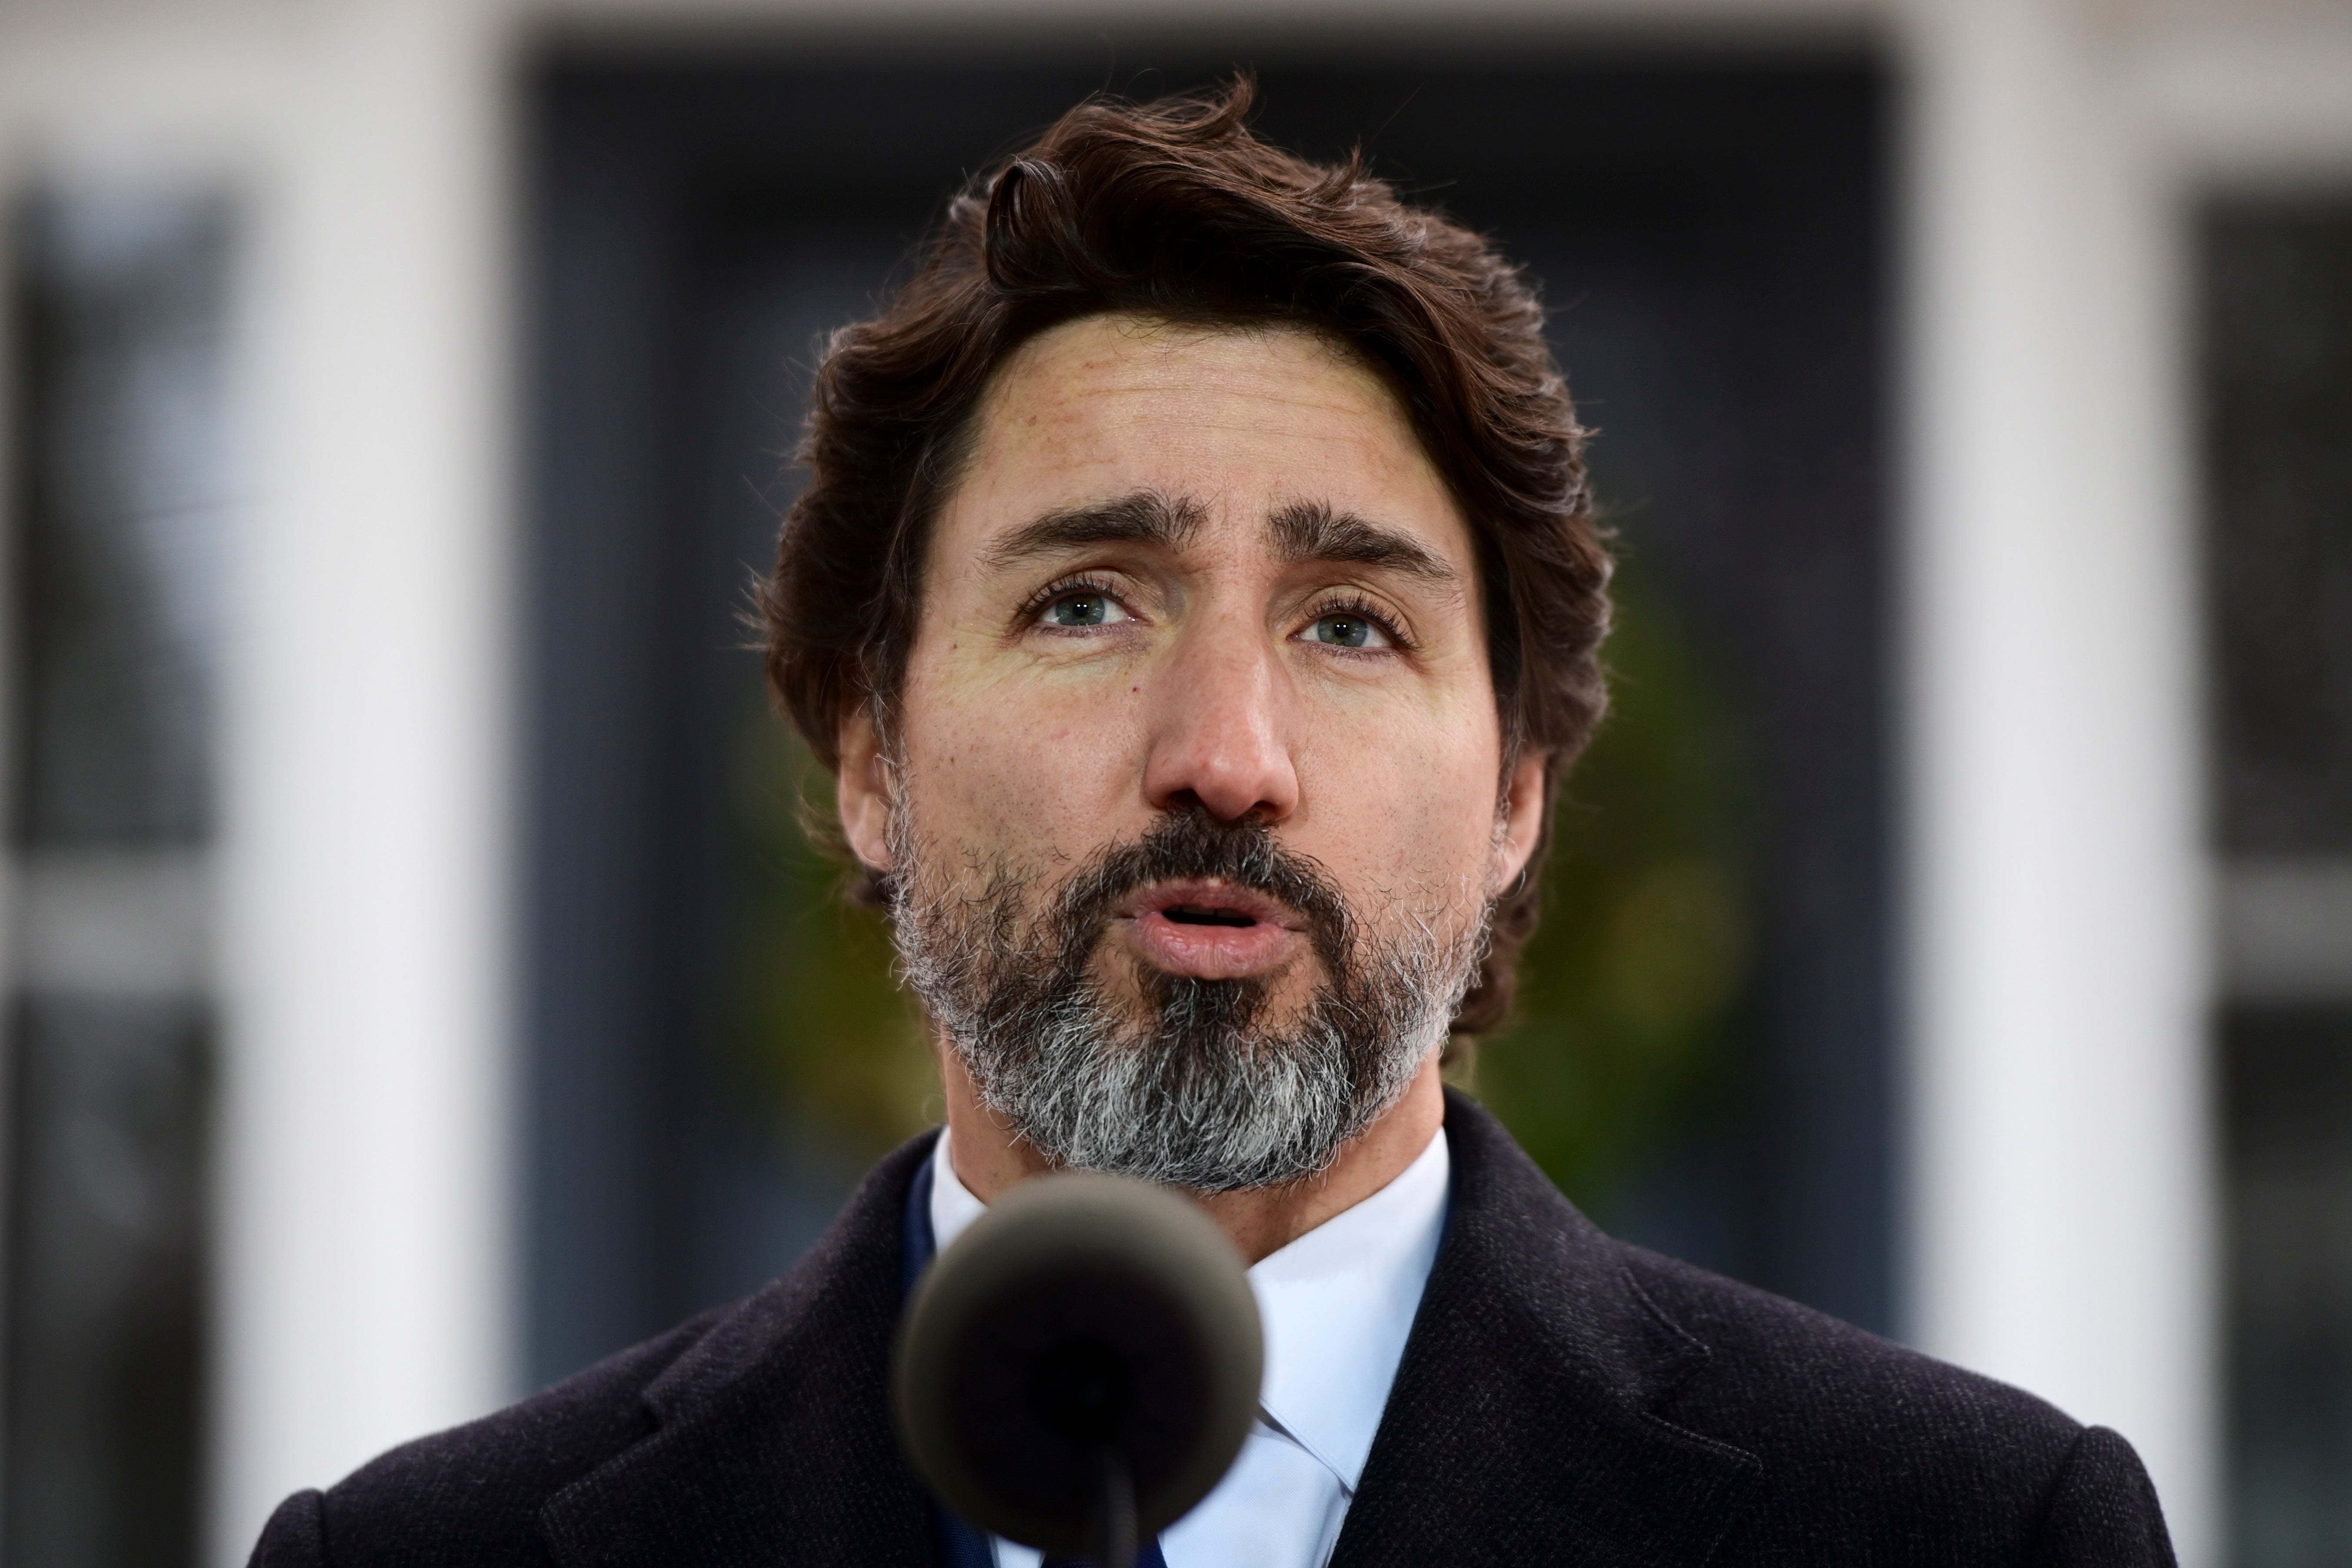 Canada’s Justin Trudeau has called farmer protests in Delhi, India ‘concerning’